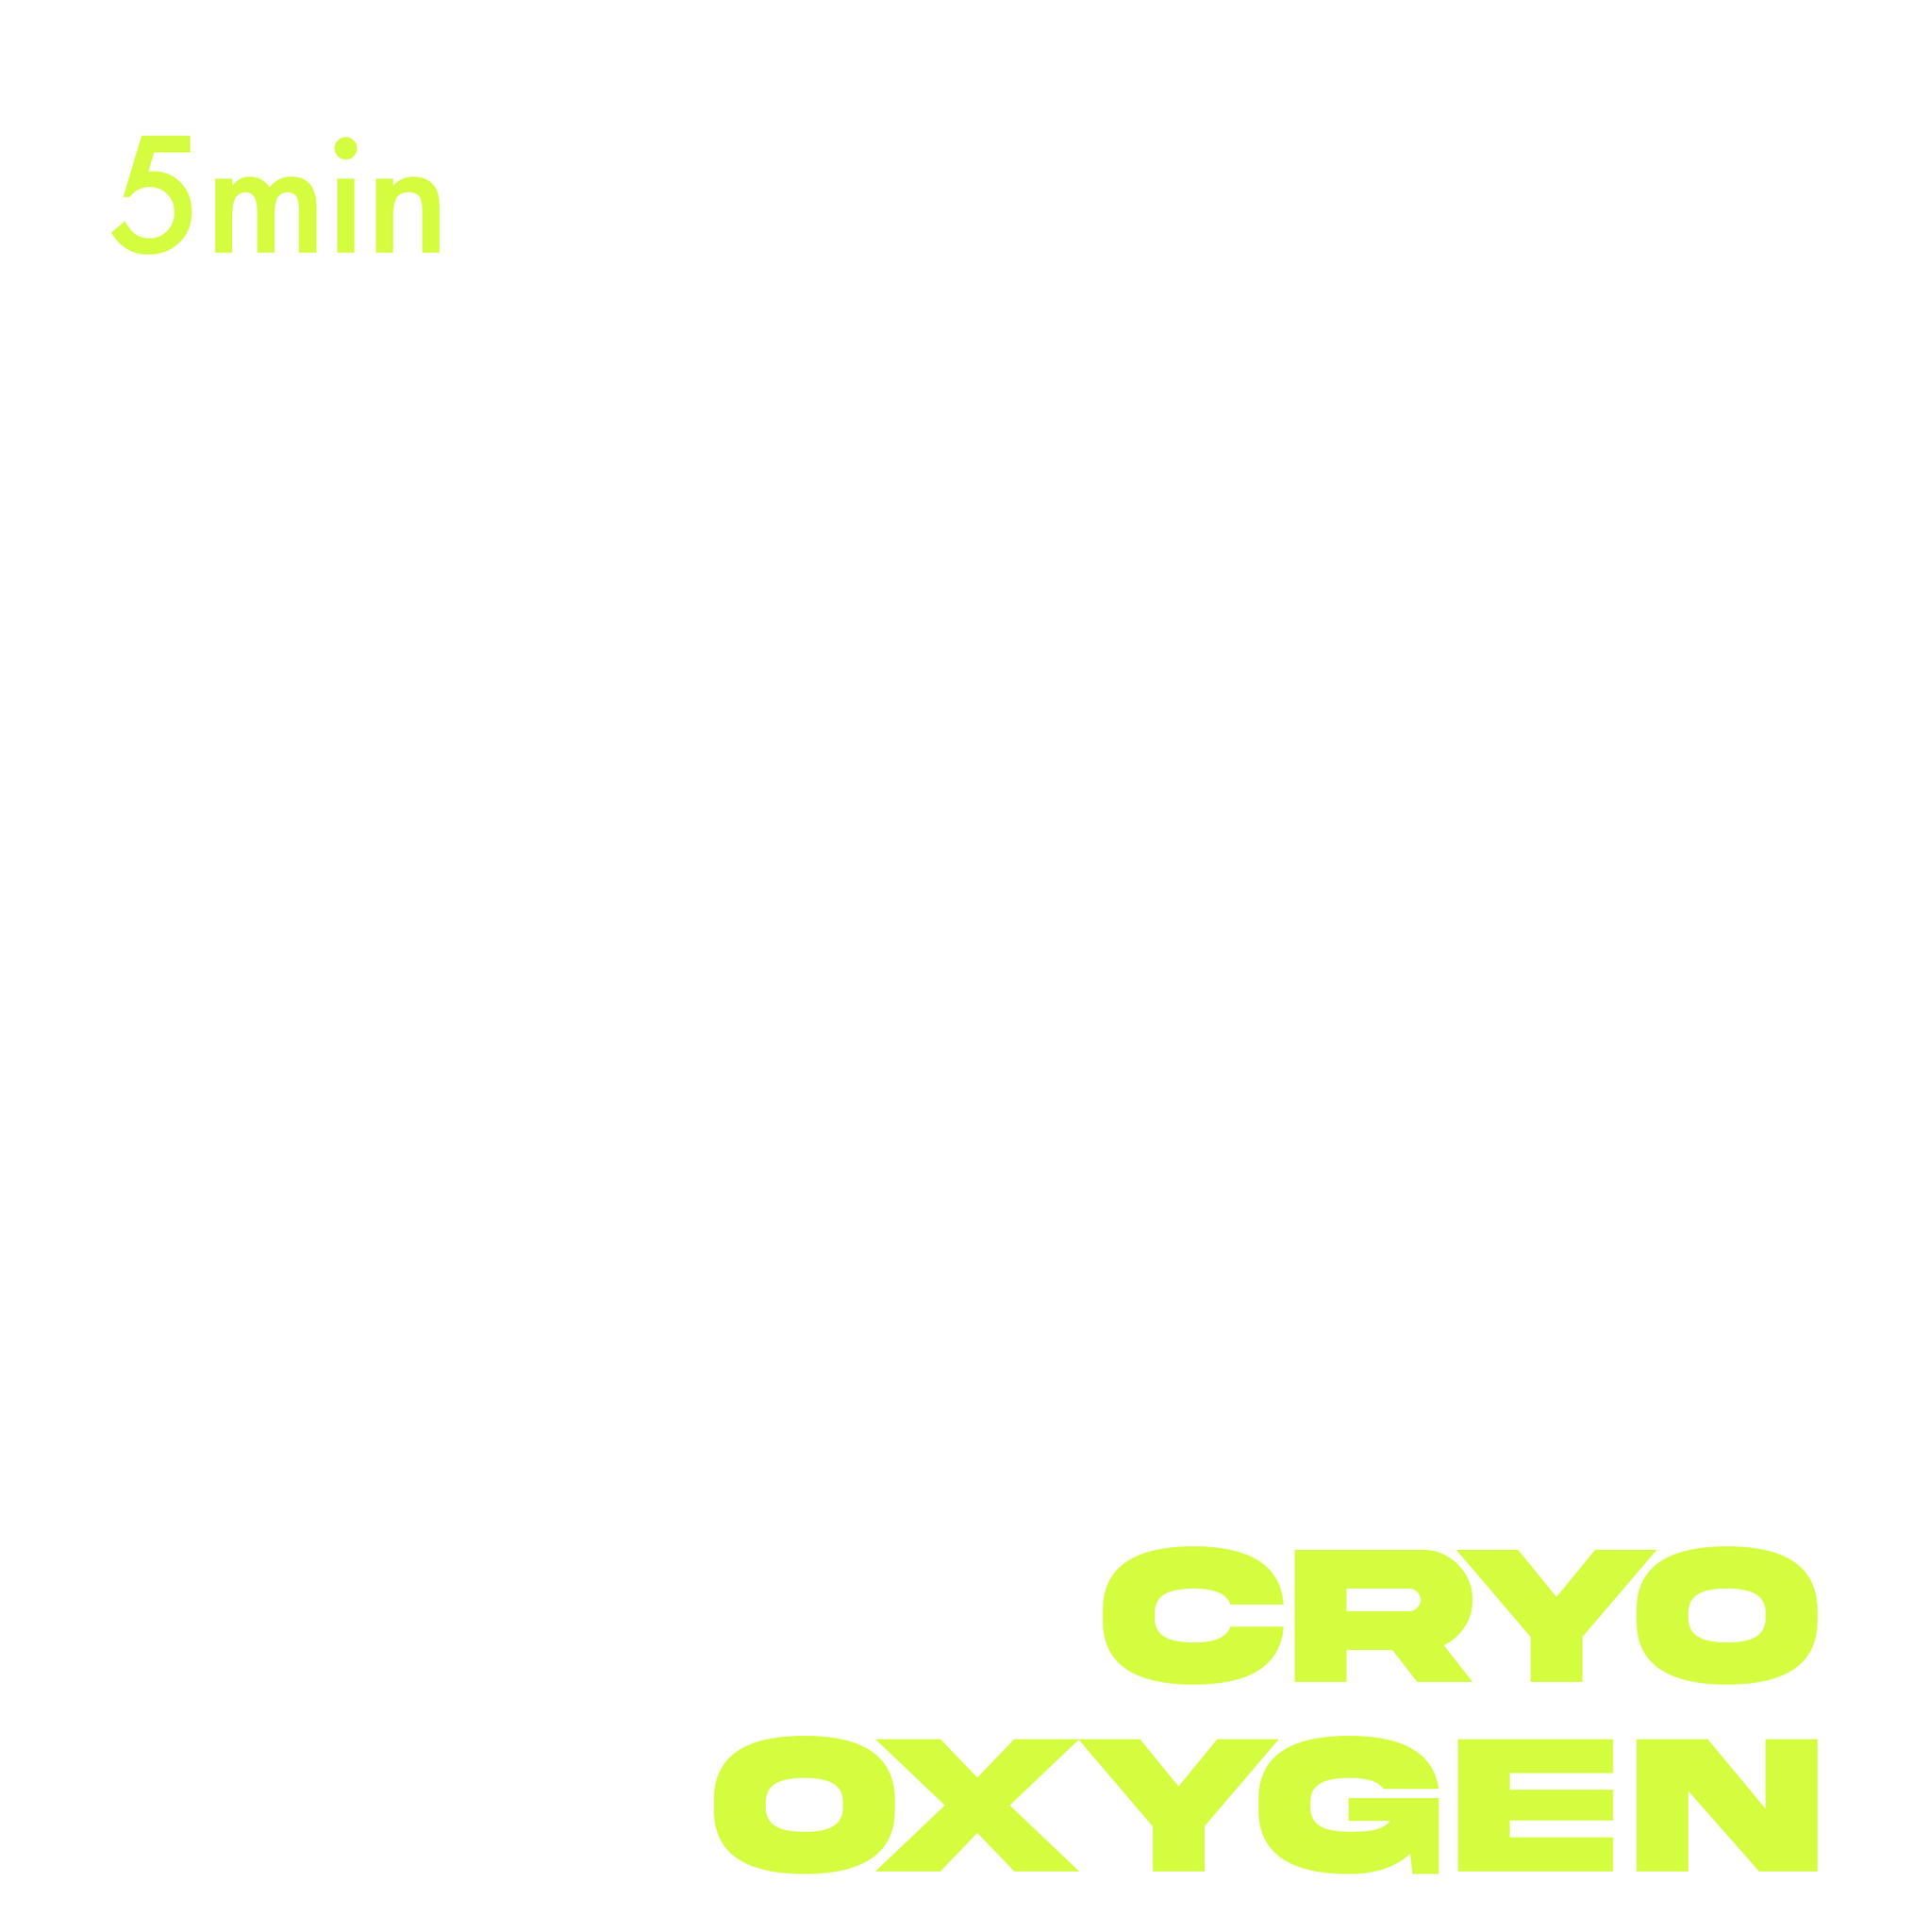 CRYO OXYGEN